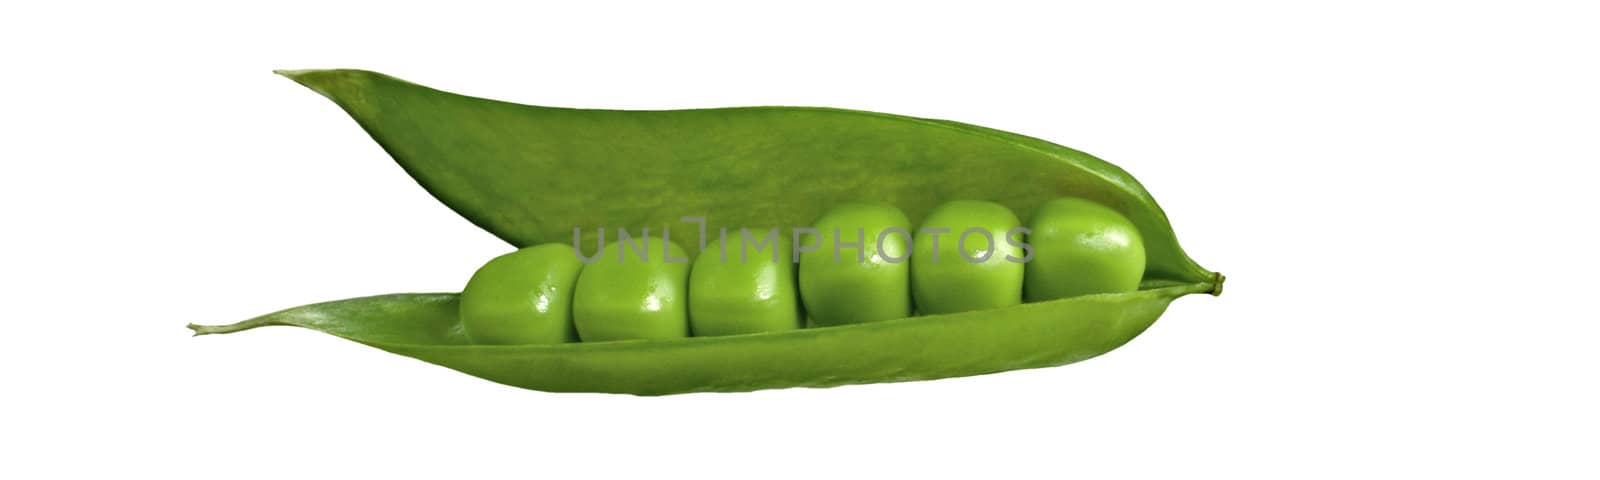 fresh green peas isolated on a white background. Studio photo